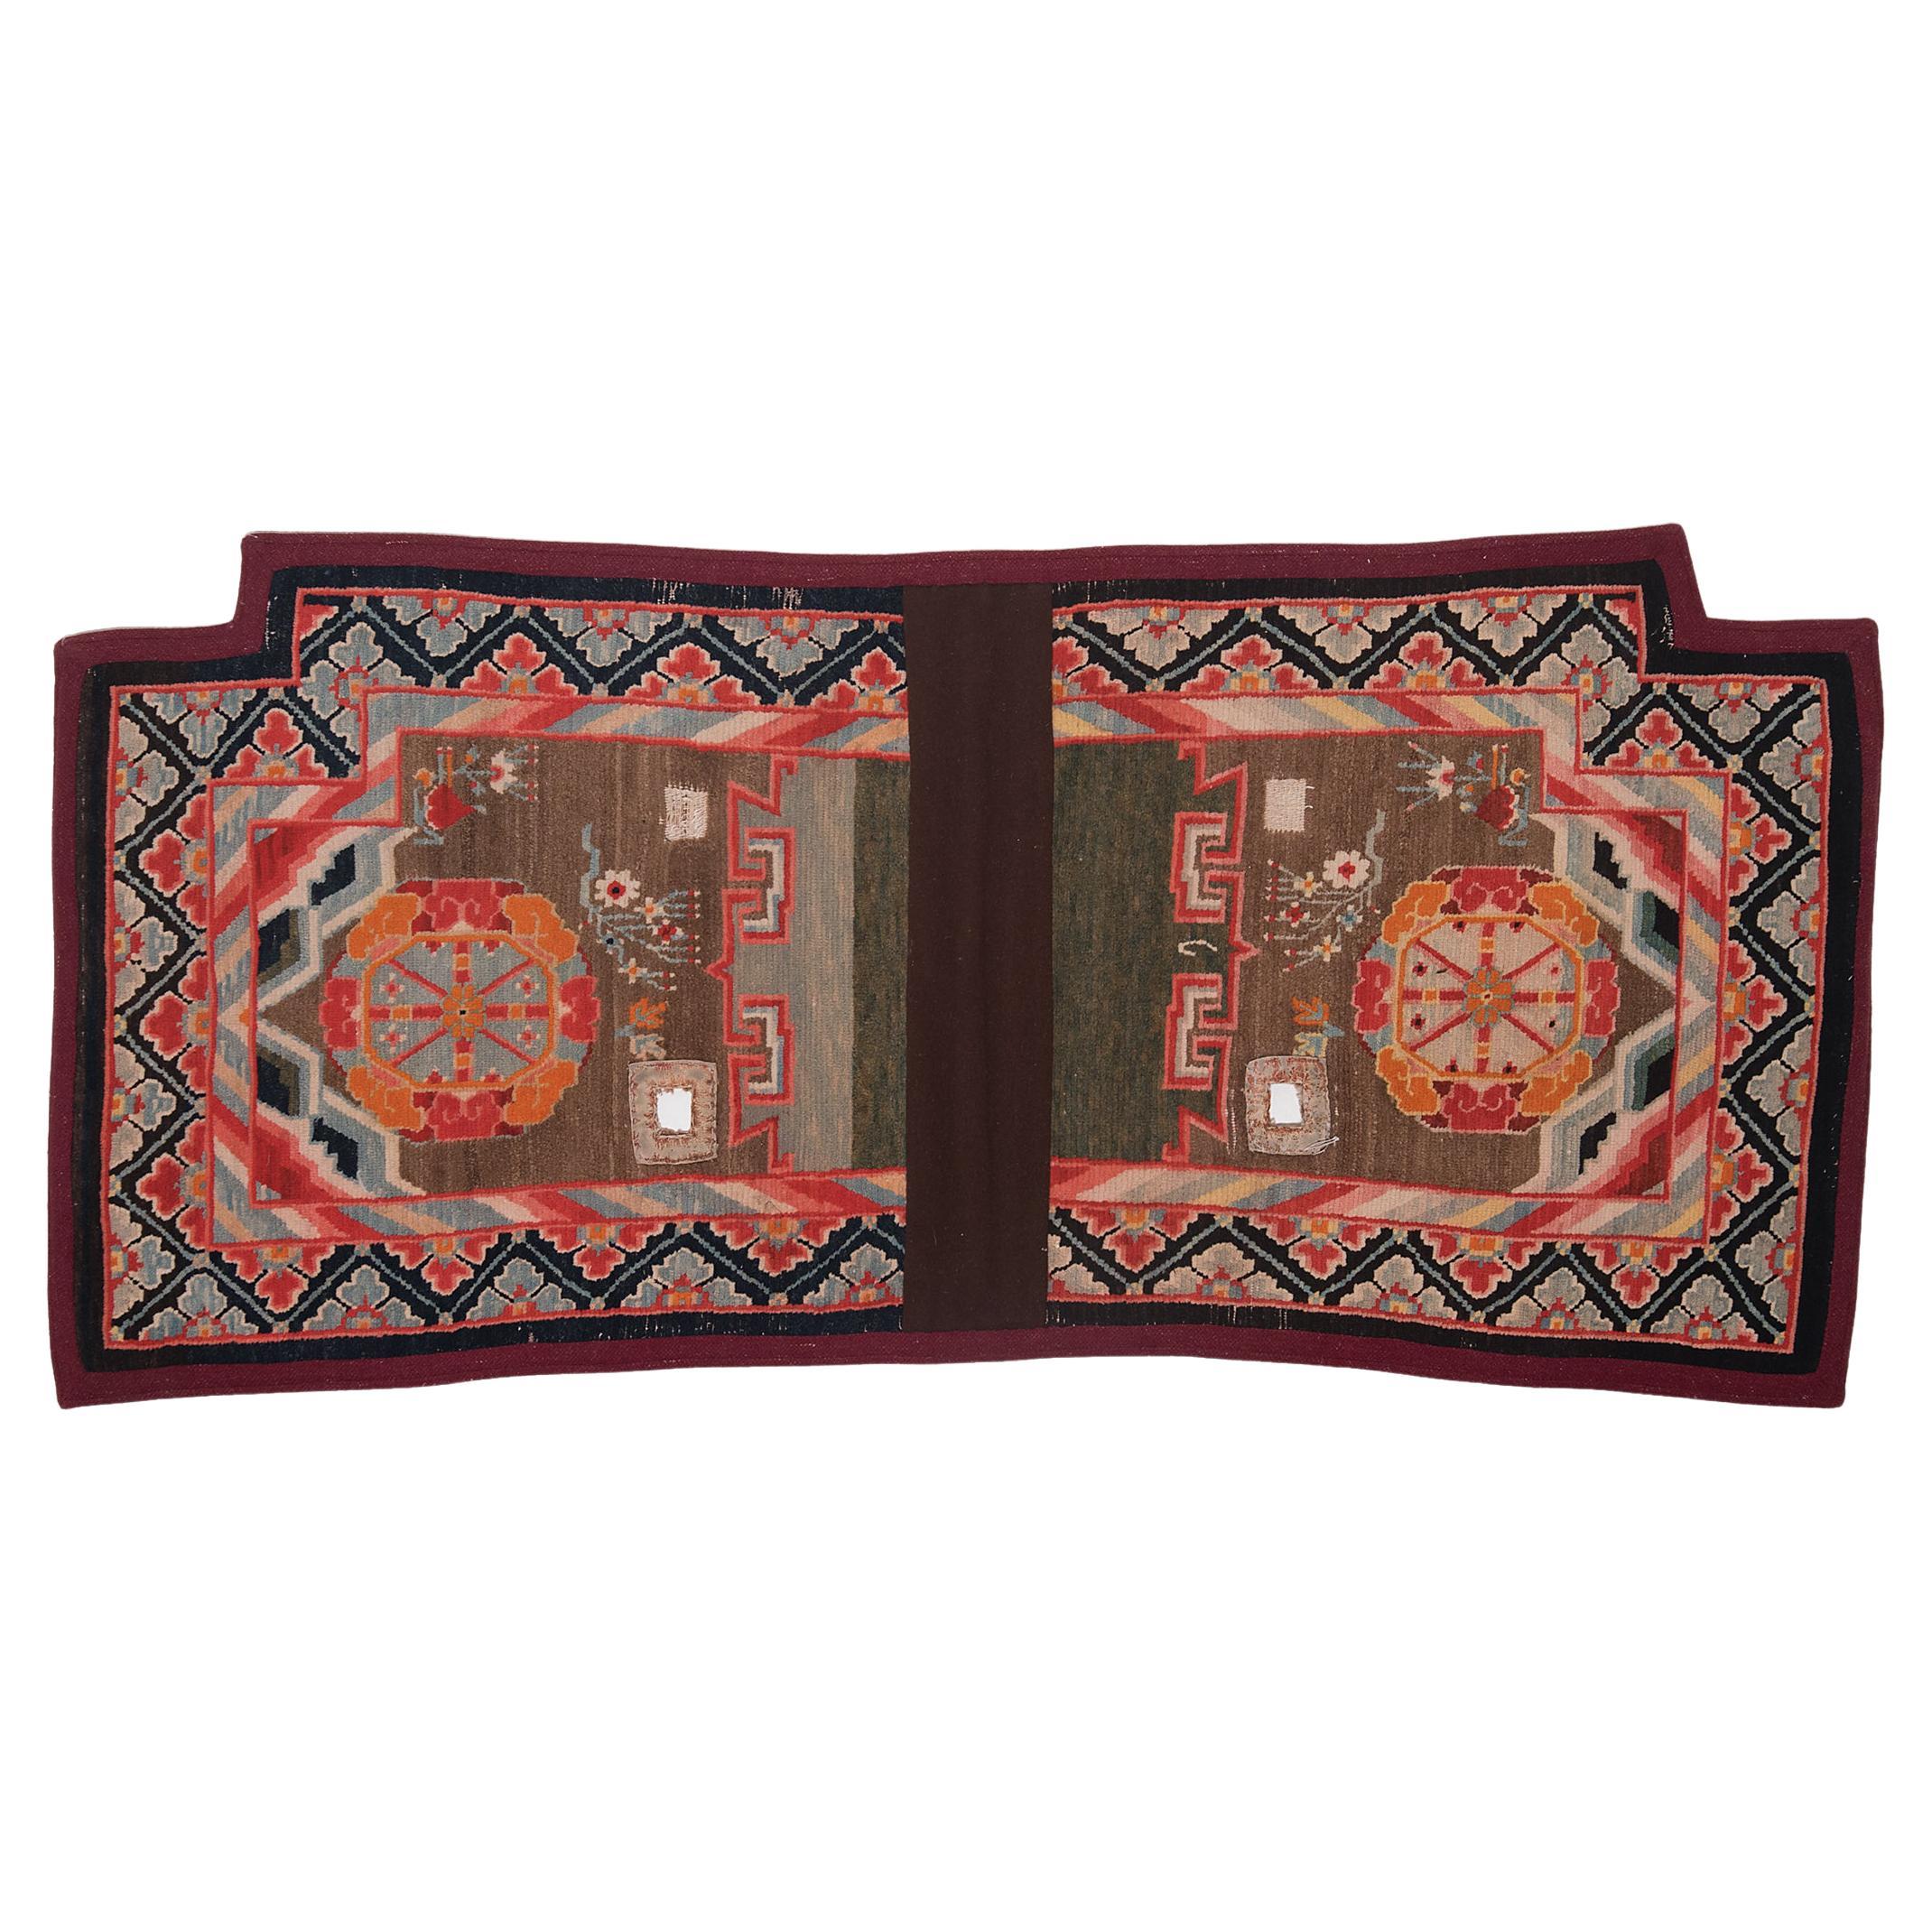 Tibetan Saddle Carpet with Wheel of Life Medallions, c. 1900